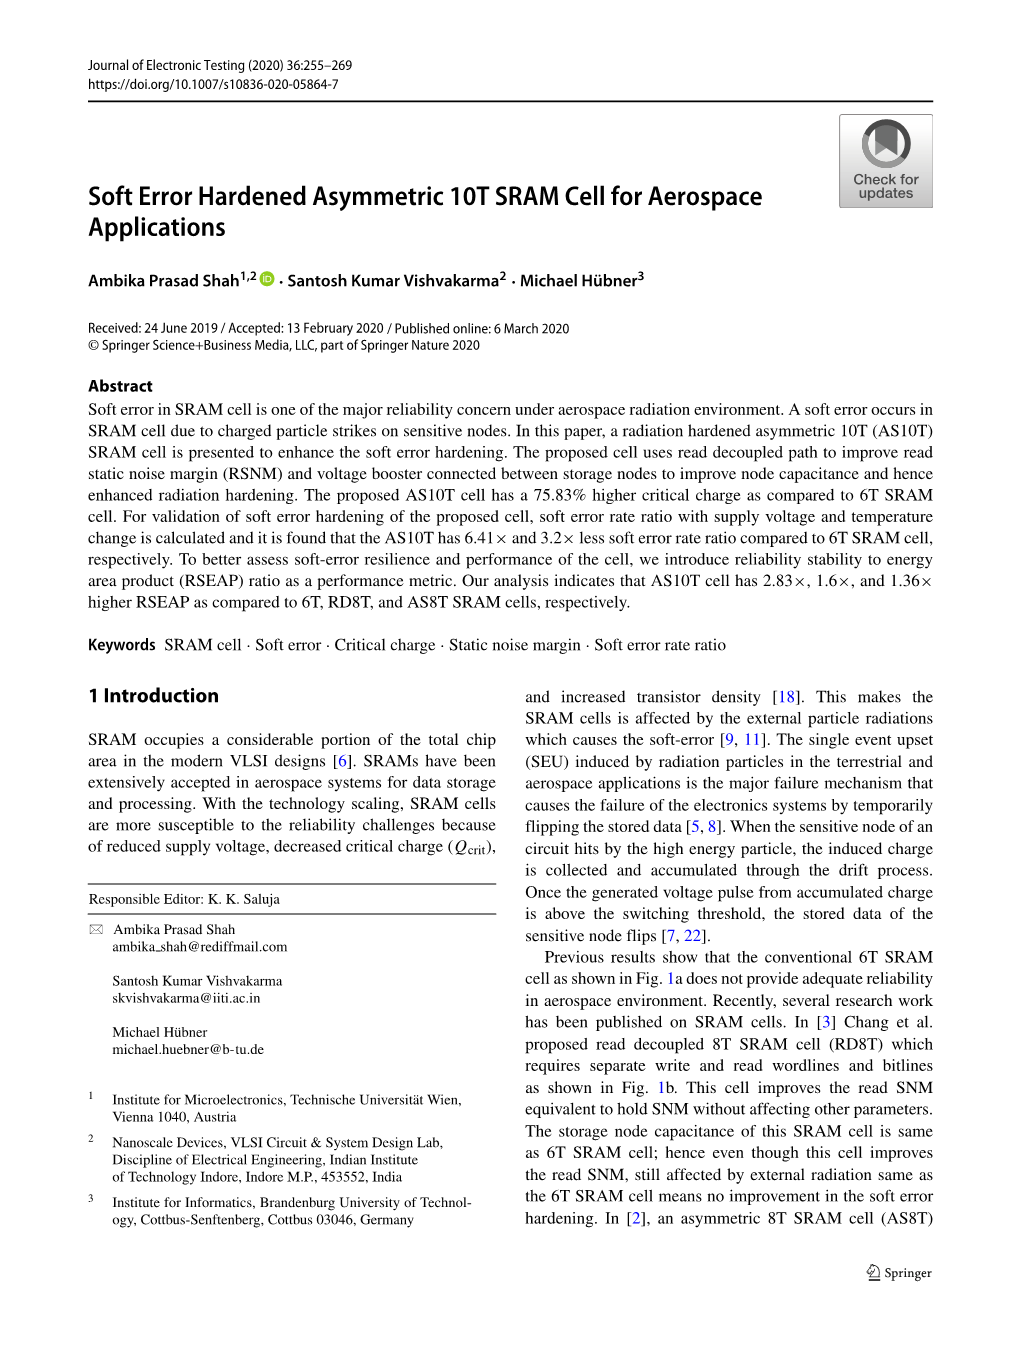 Soft Error Hardened Asymmetric 10T SRAM Cell for Aerospace Applications